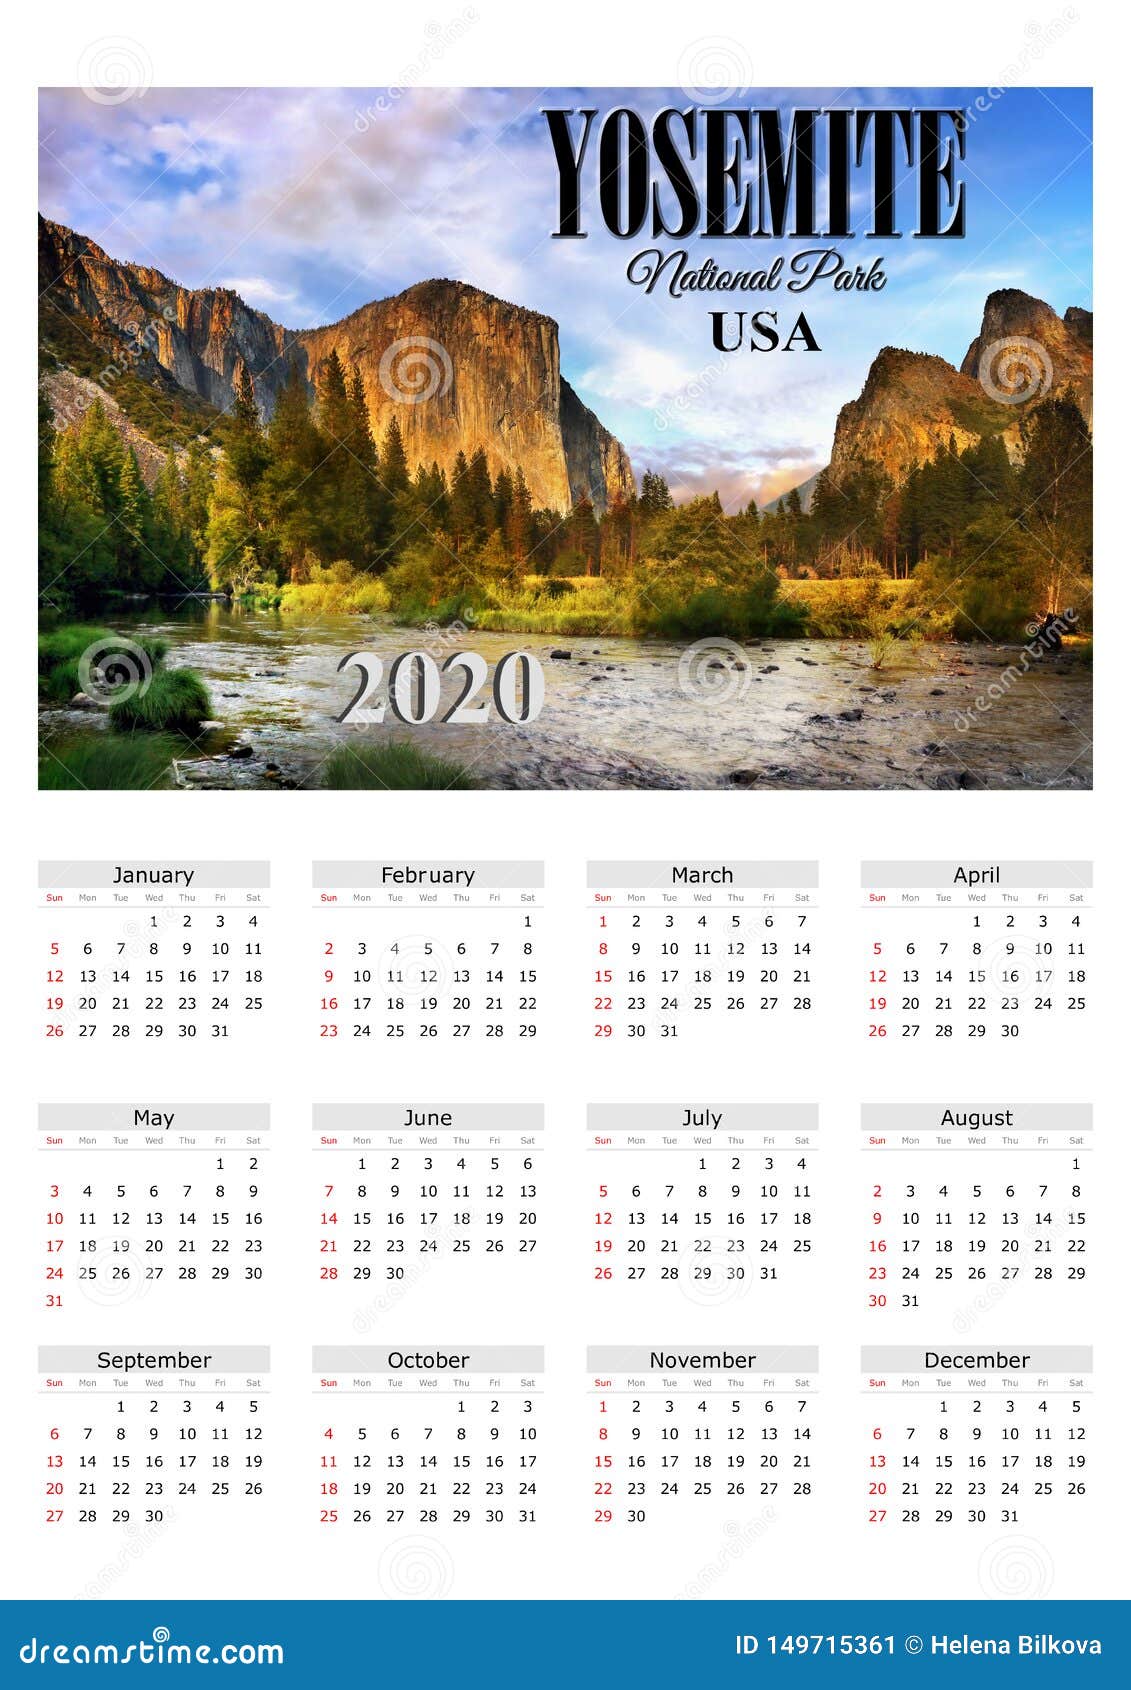 Calendar Poster 2020 Yosemite NP, USA Stock Image Image of calendar